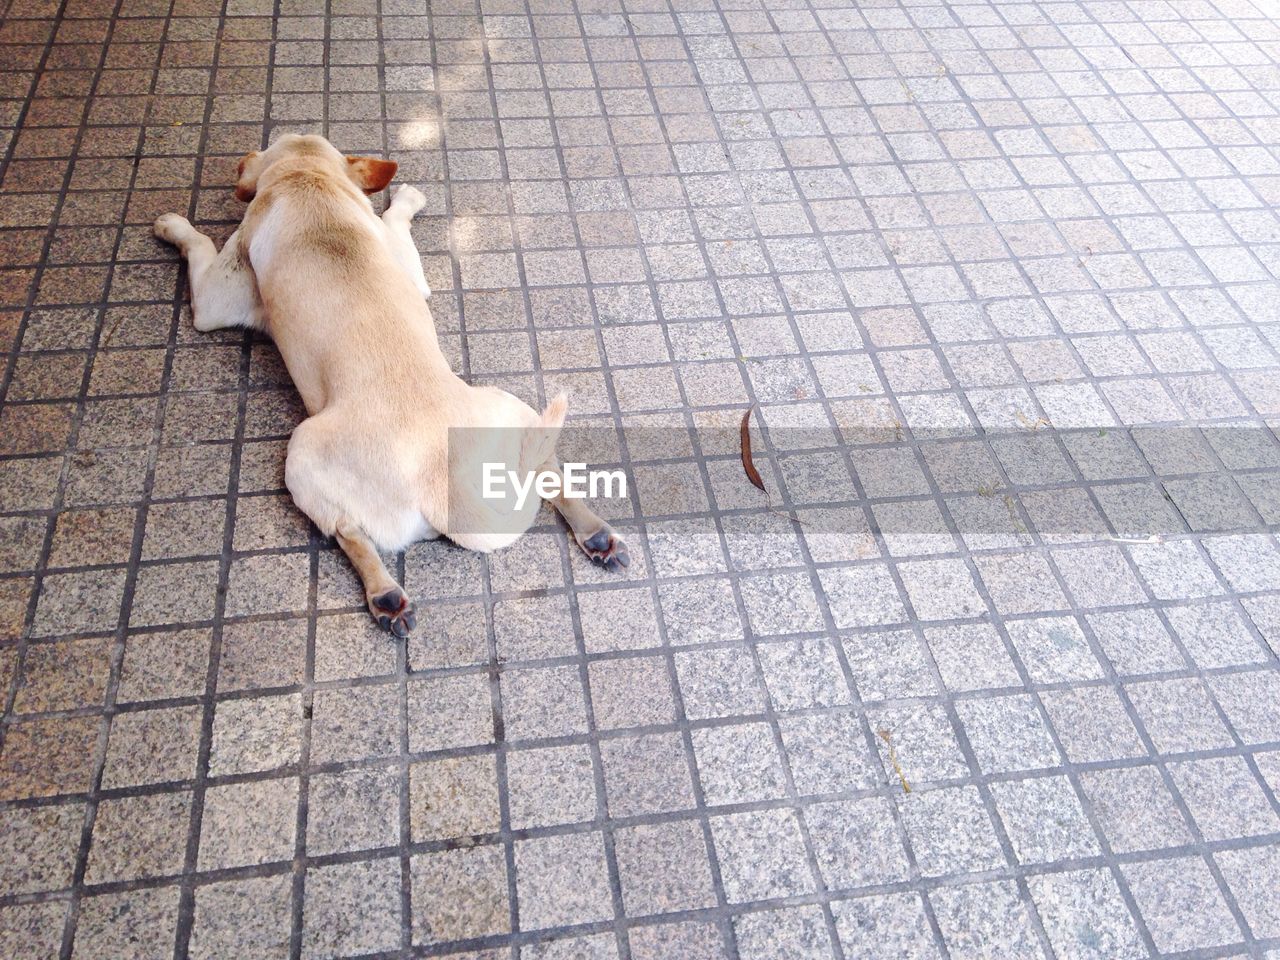 High angle view of dog on sidewalk